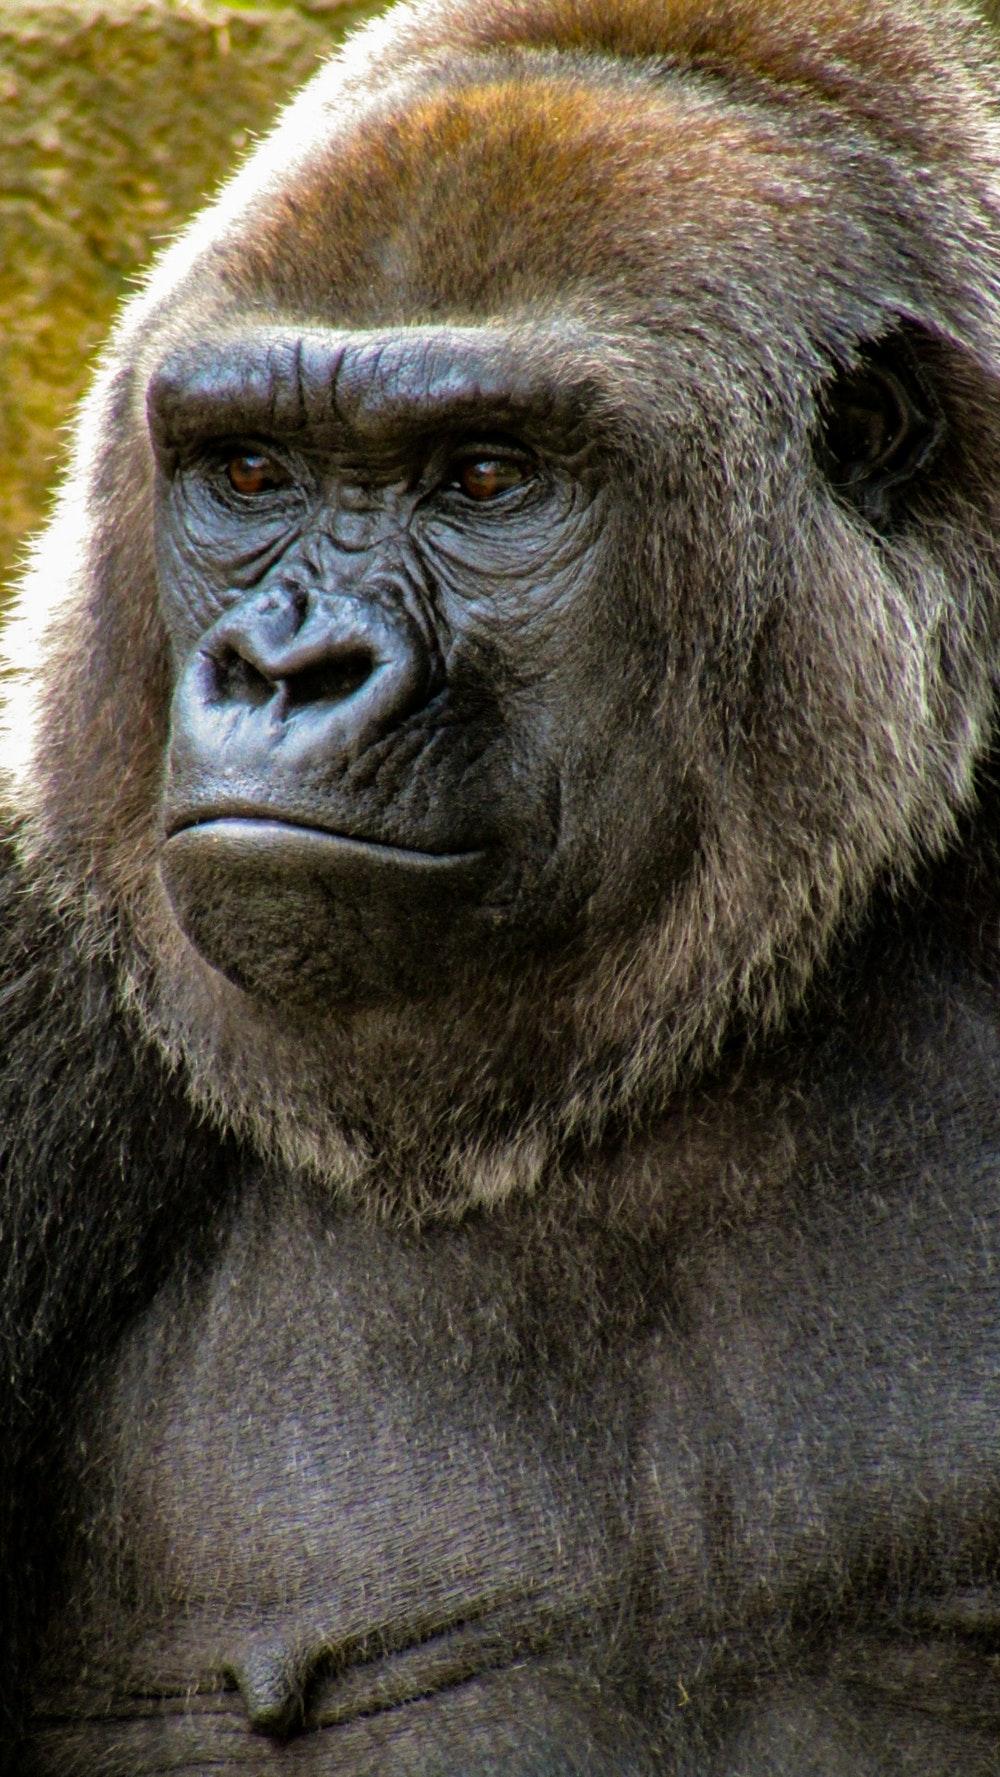 Gorilla Picture. Download Free Image